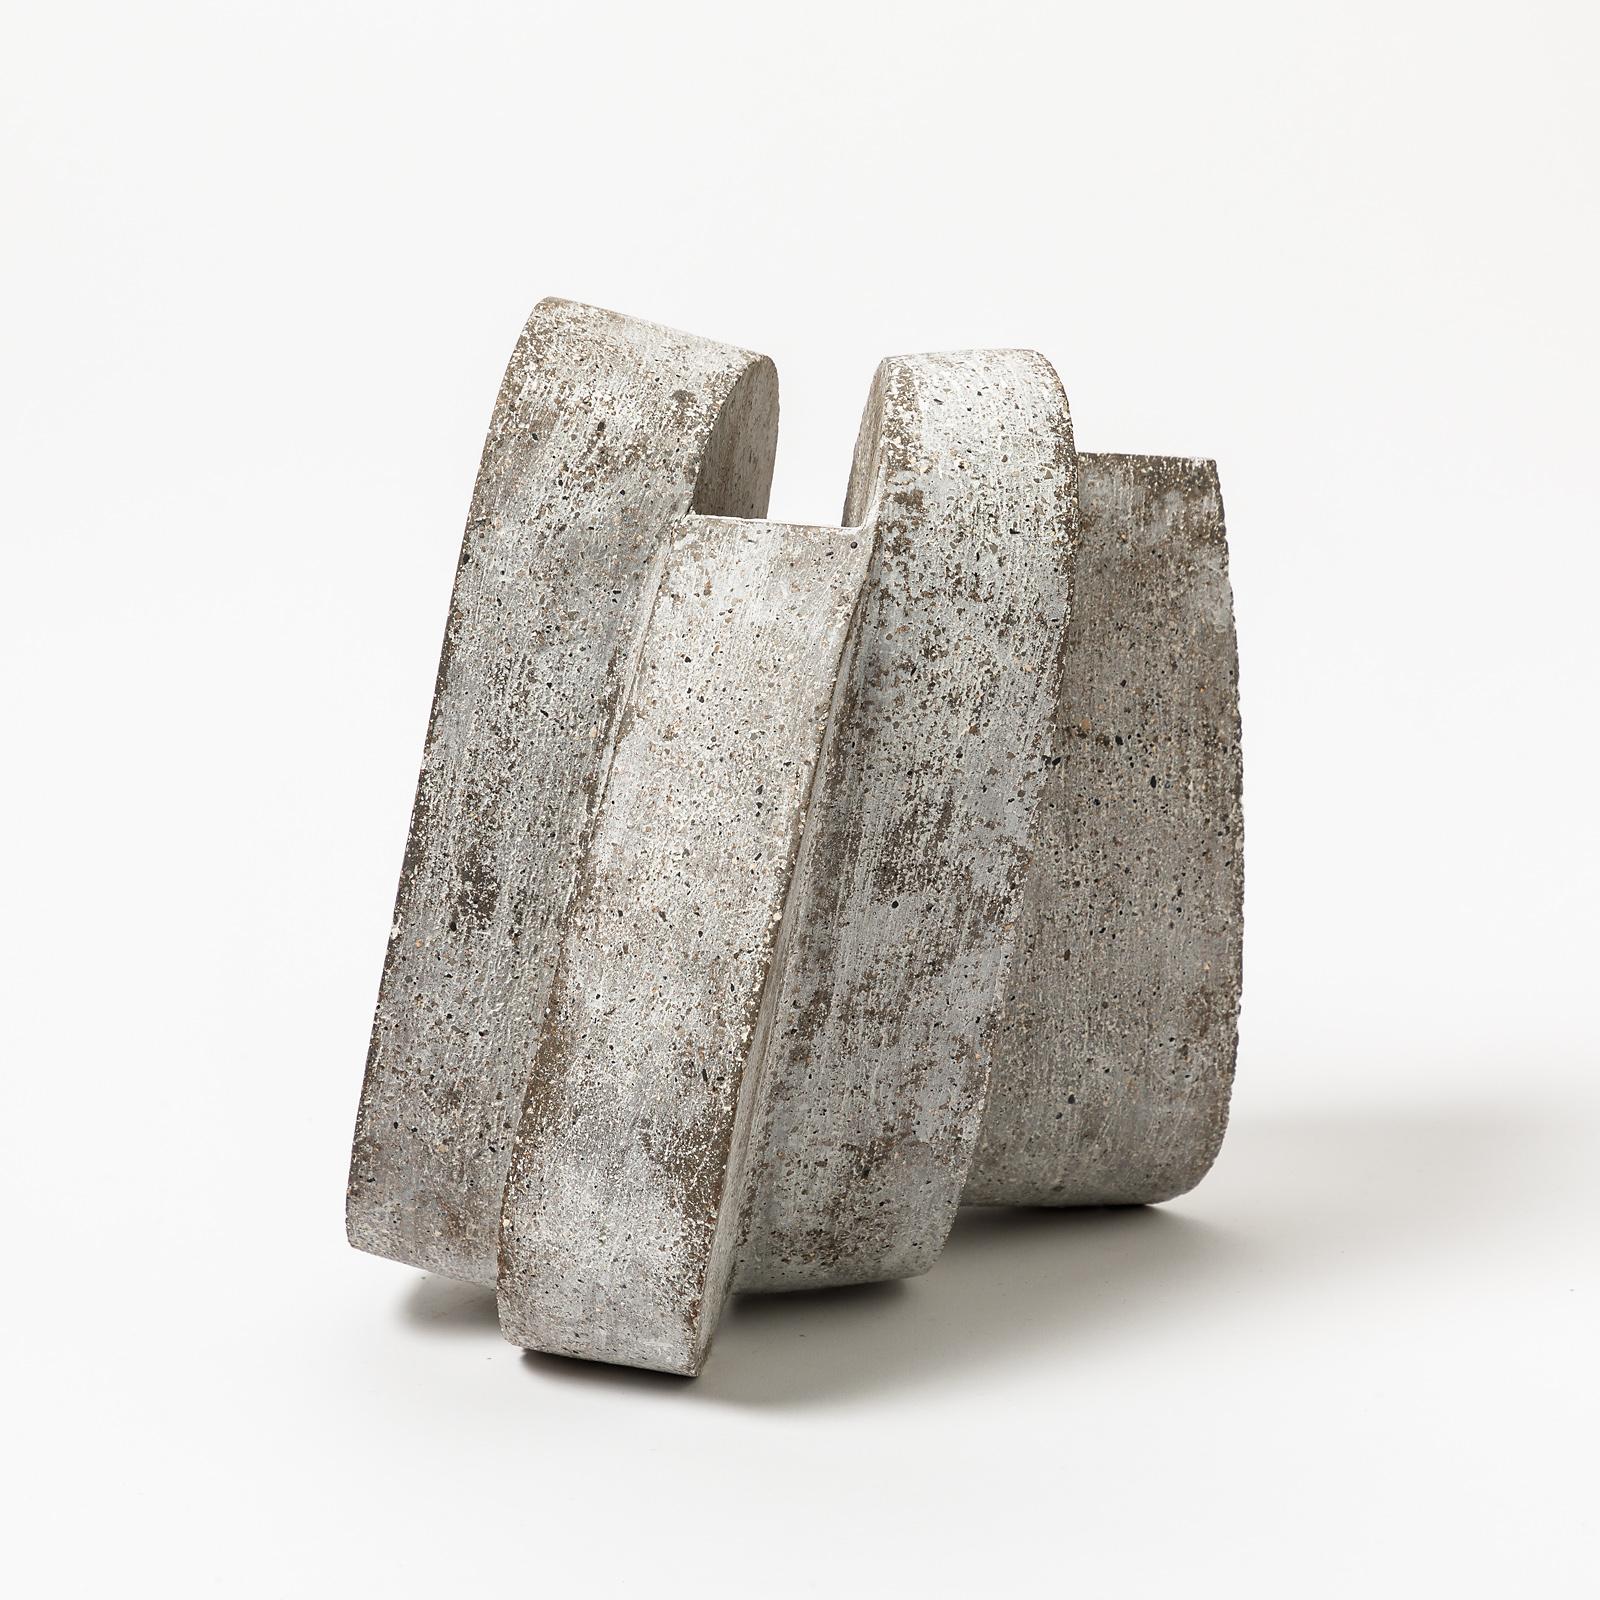 Contemporary Stoneware Sculpture by Maarten Stuer, Entitled 